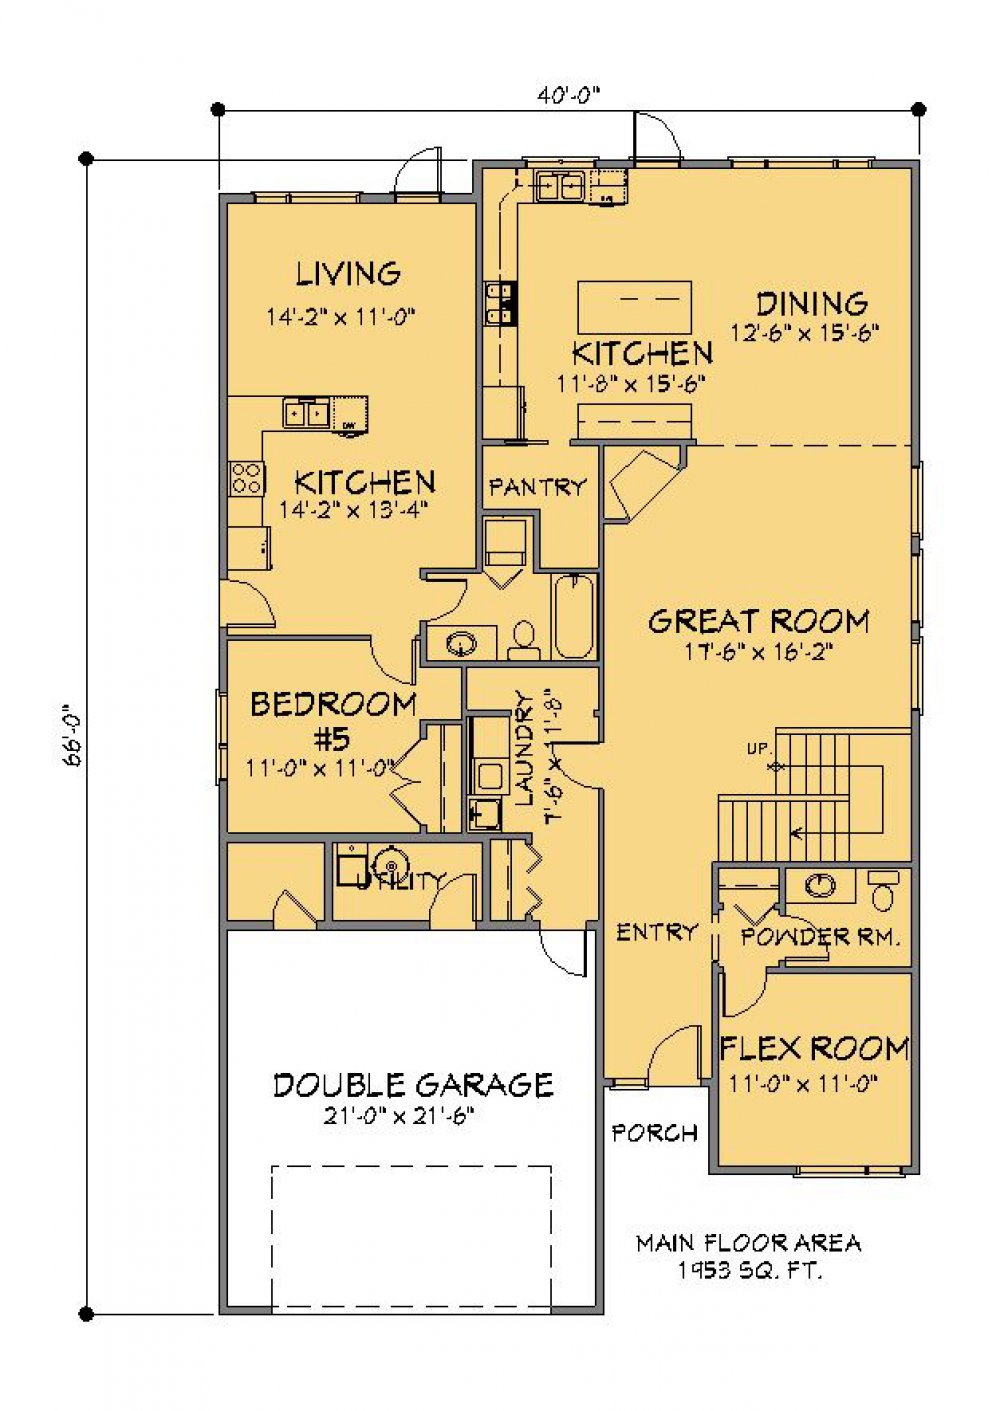 House Plan E1713-10  Main Floor Plan REVERSE